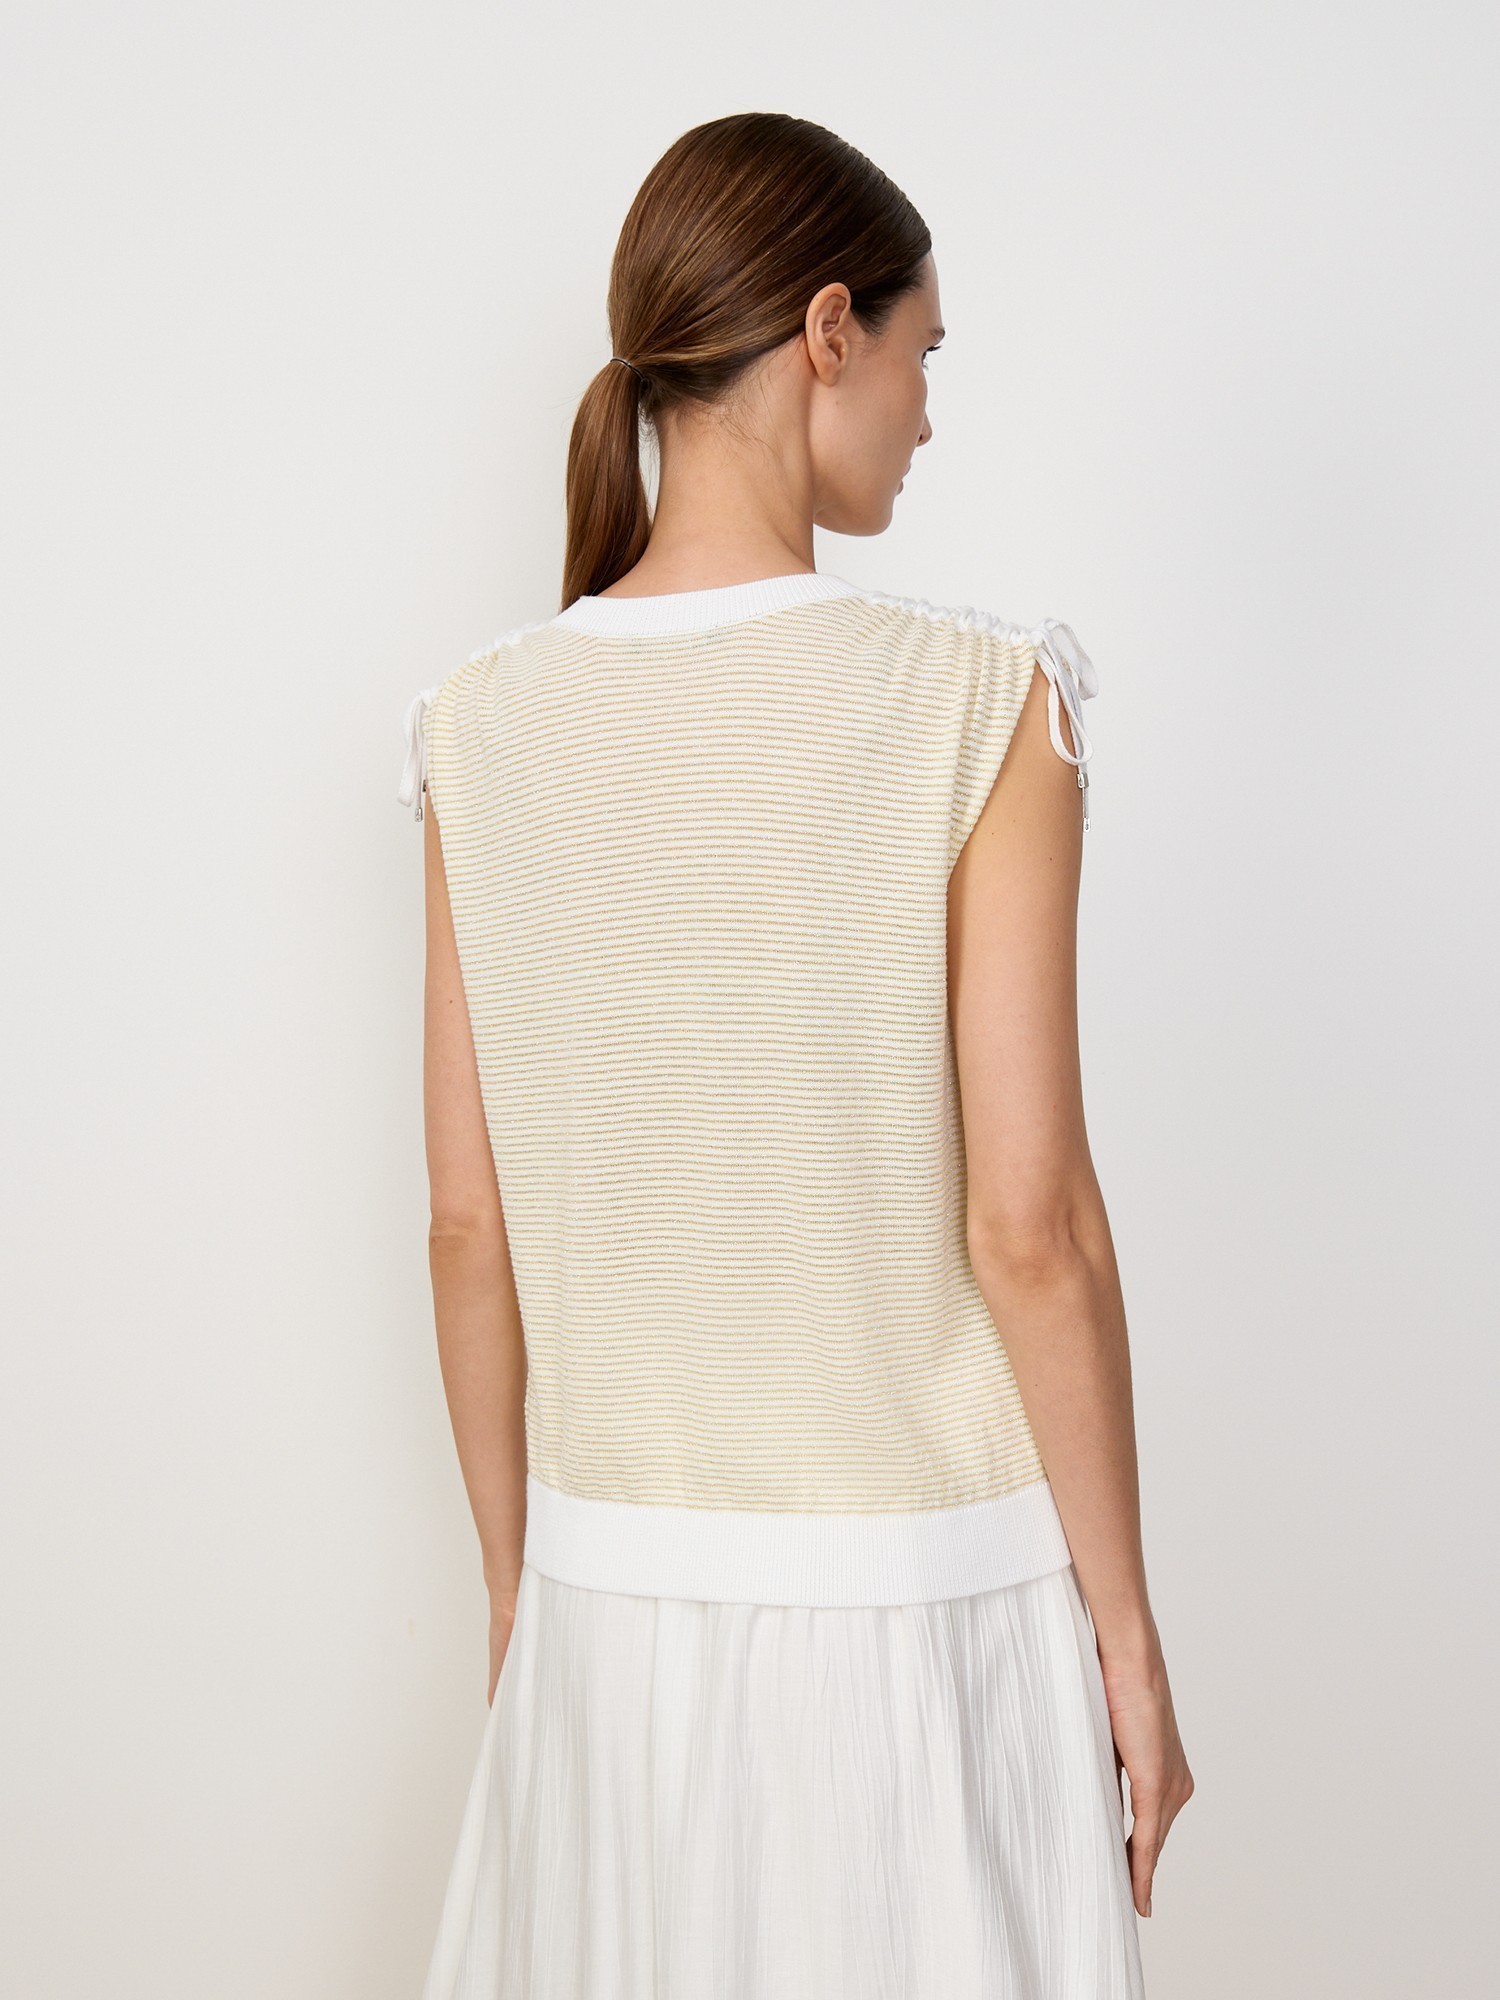 Вязаная блуза с люрексом Elis BL1054V, цвет жёлто-белый, размер 46 - фото 4